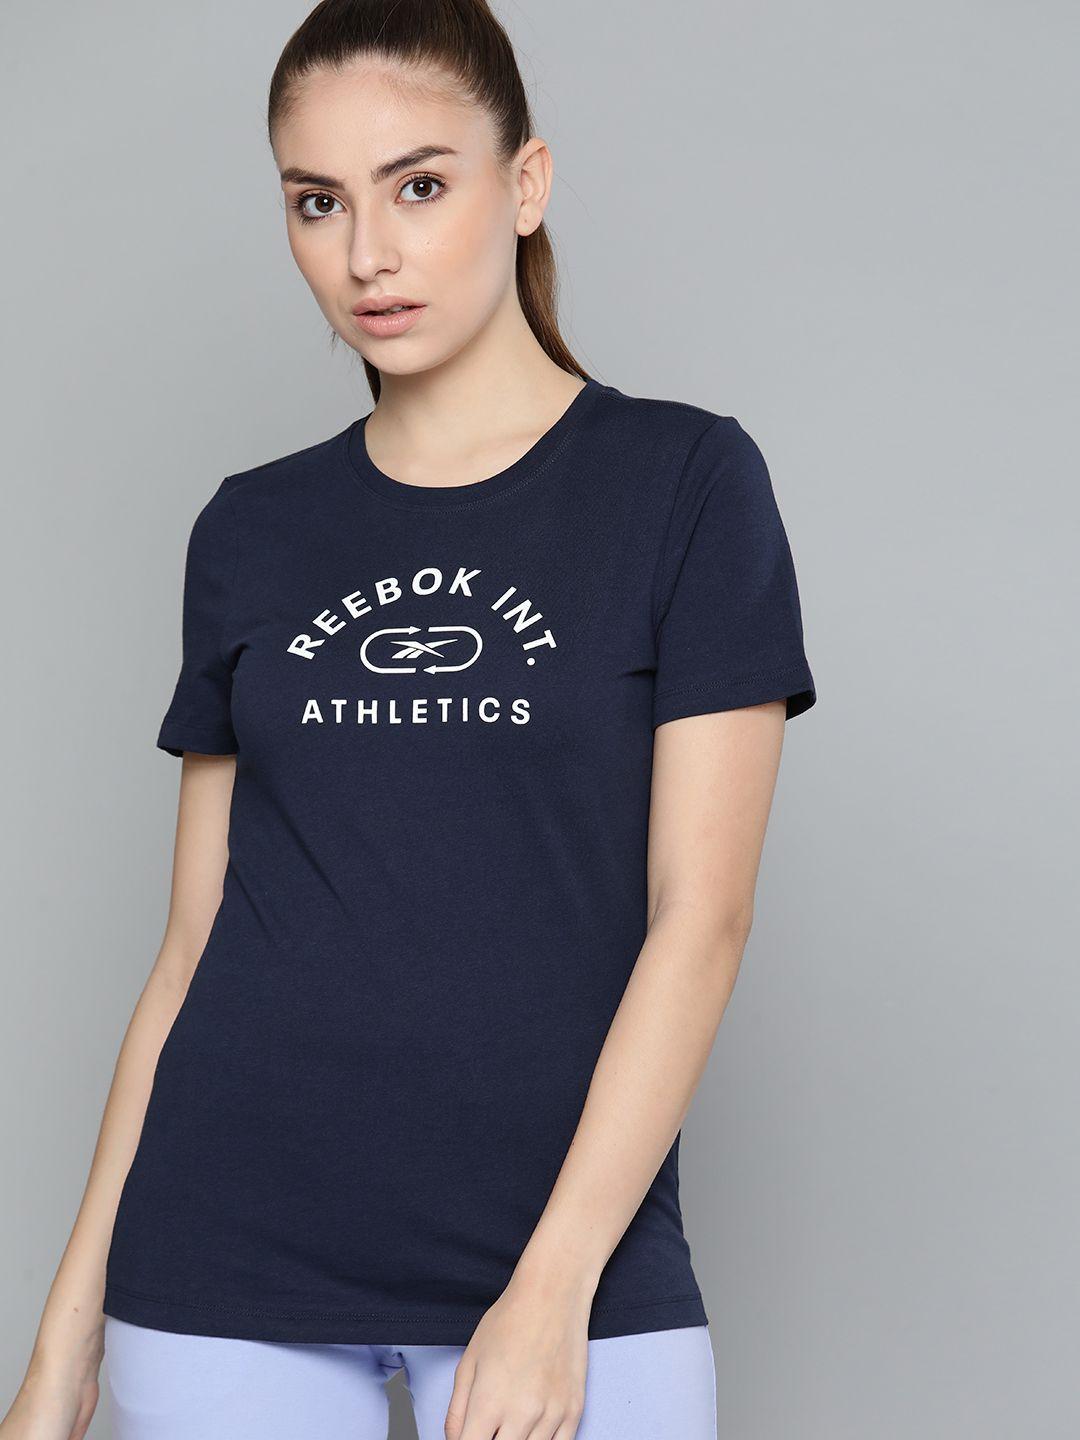 reebok women navy blue & white w prime graphic print slim fit training pure cotton t-shirt